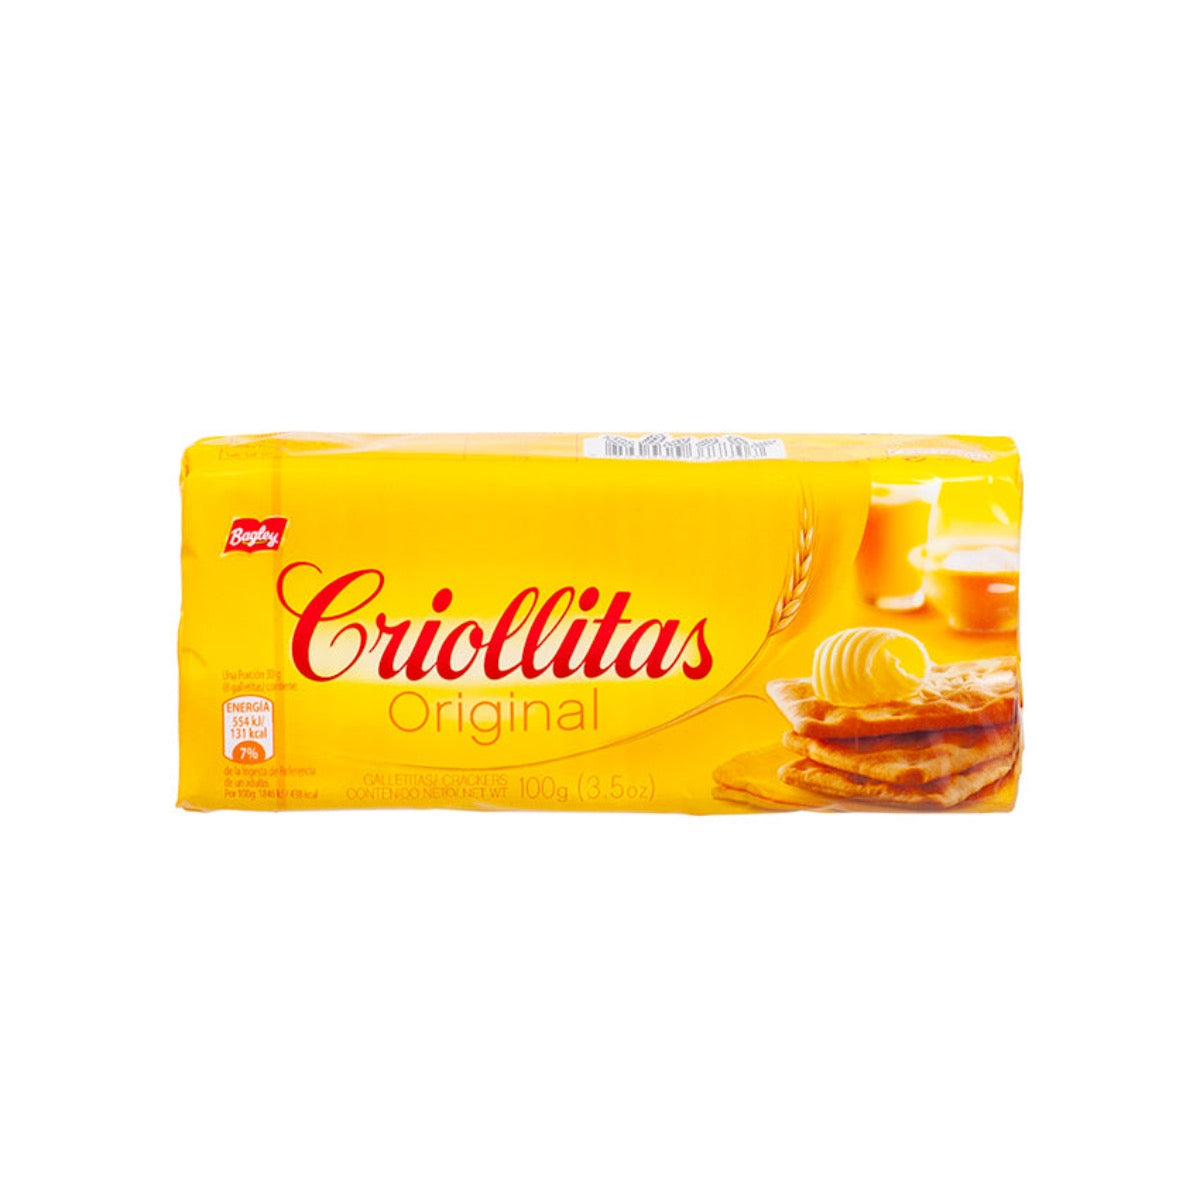 Criollitas Original 100g